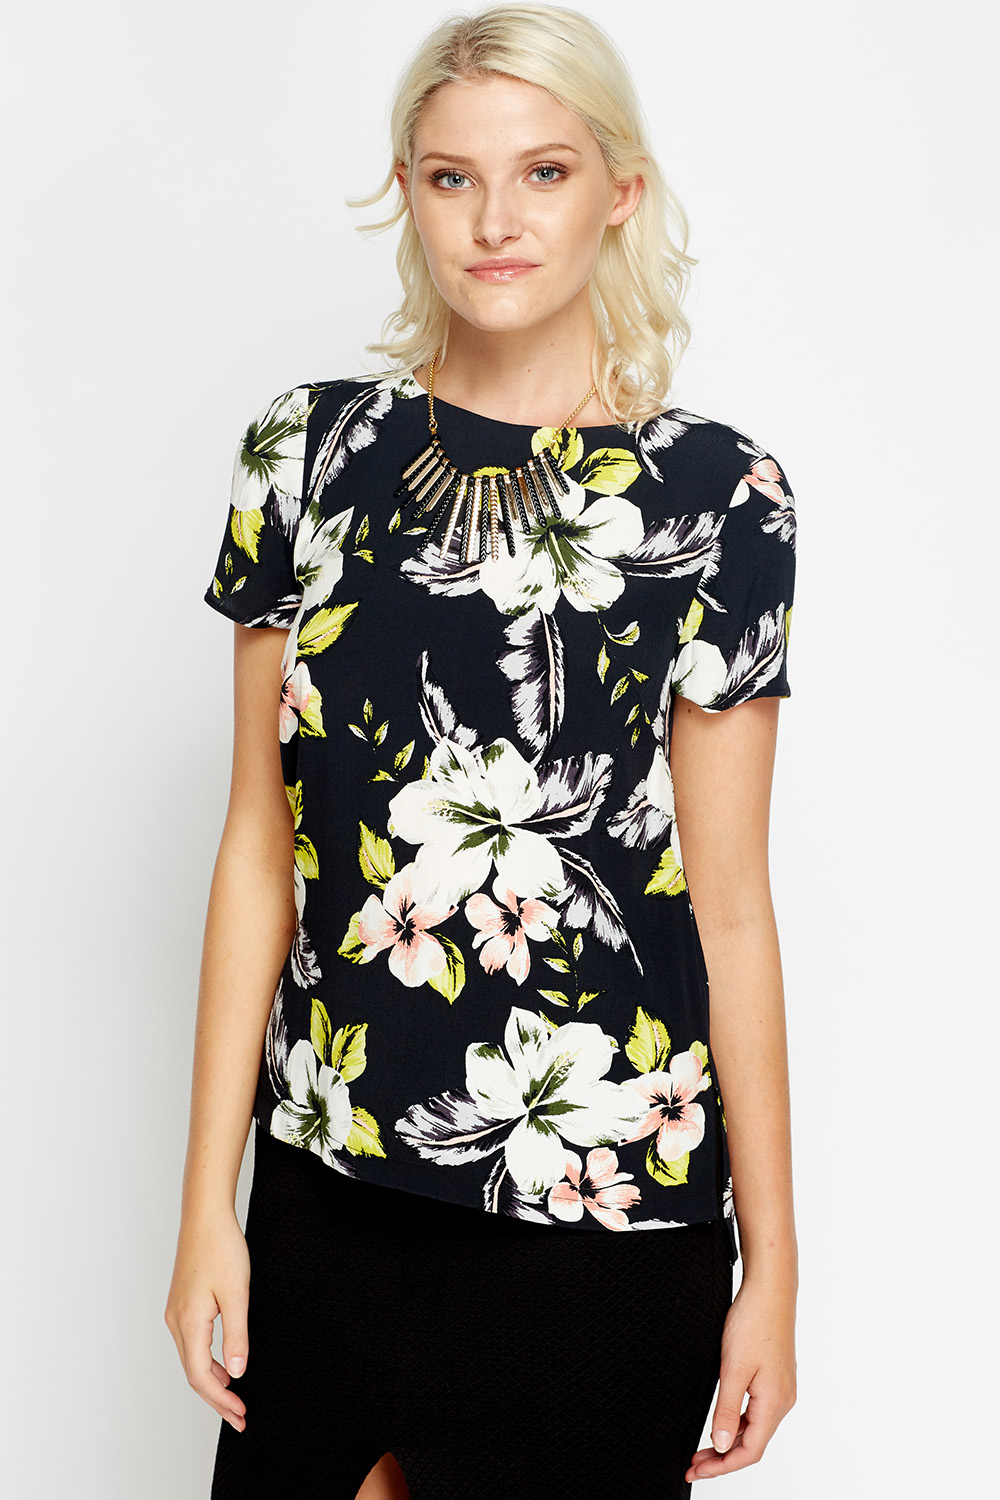 Floral Black Multi T-Shirt - Just $7